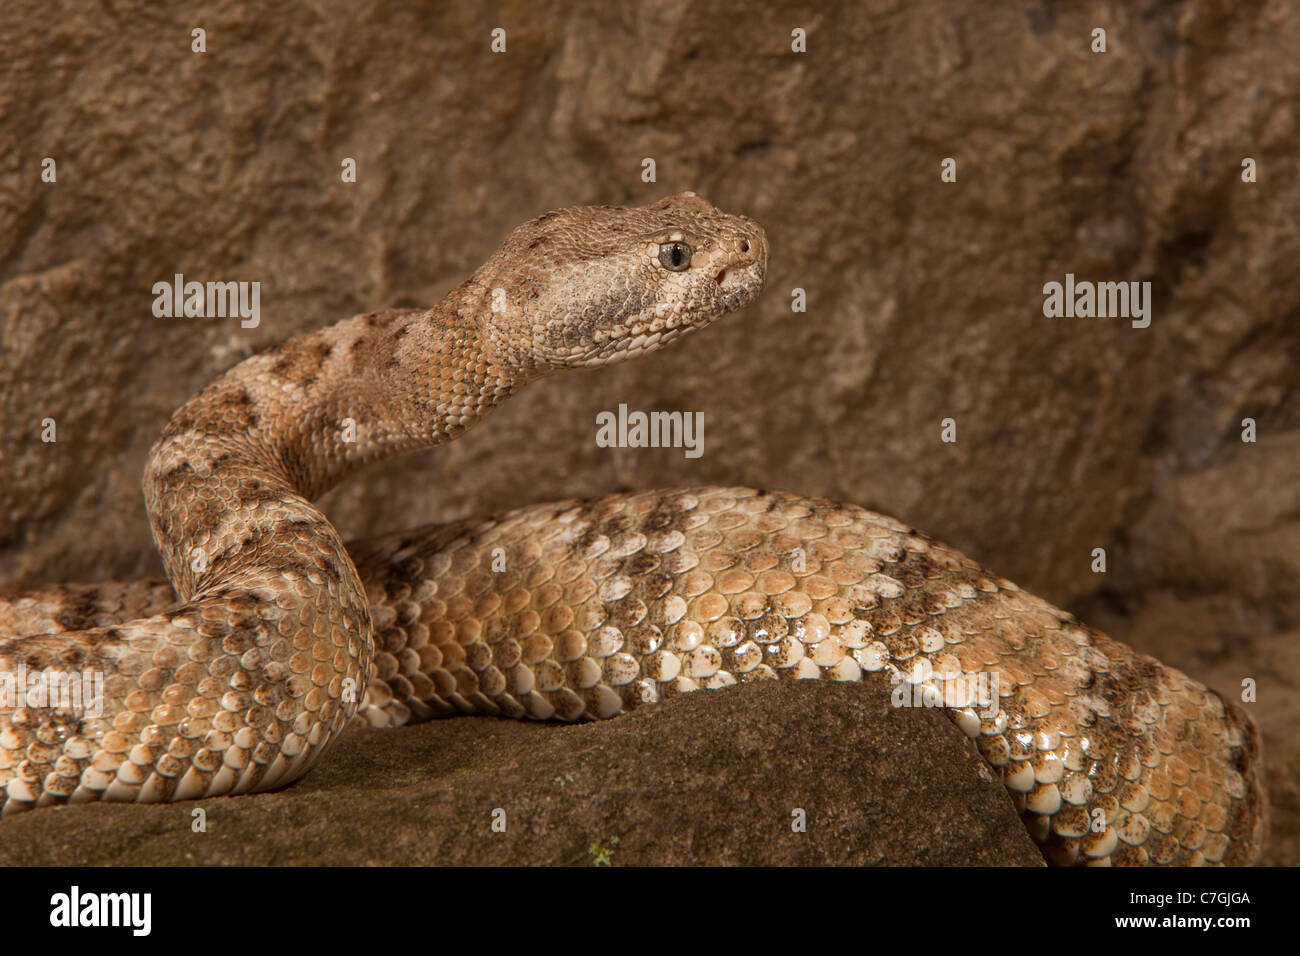 Chiazzato Rattlesnake Crotalus mitchelli pirro Foto Stock